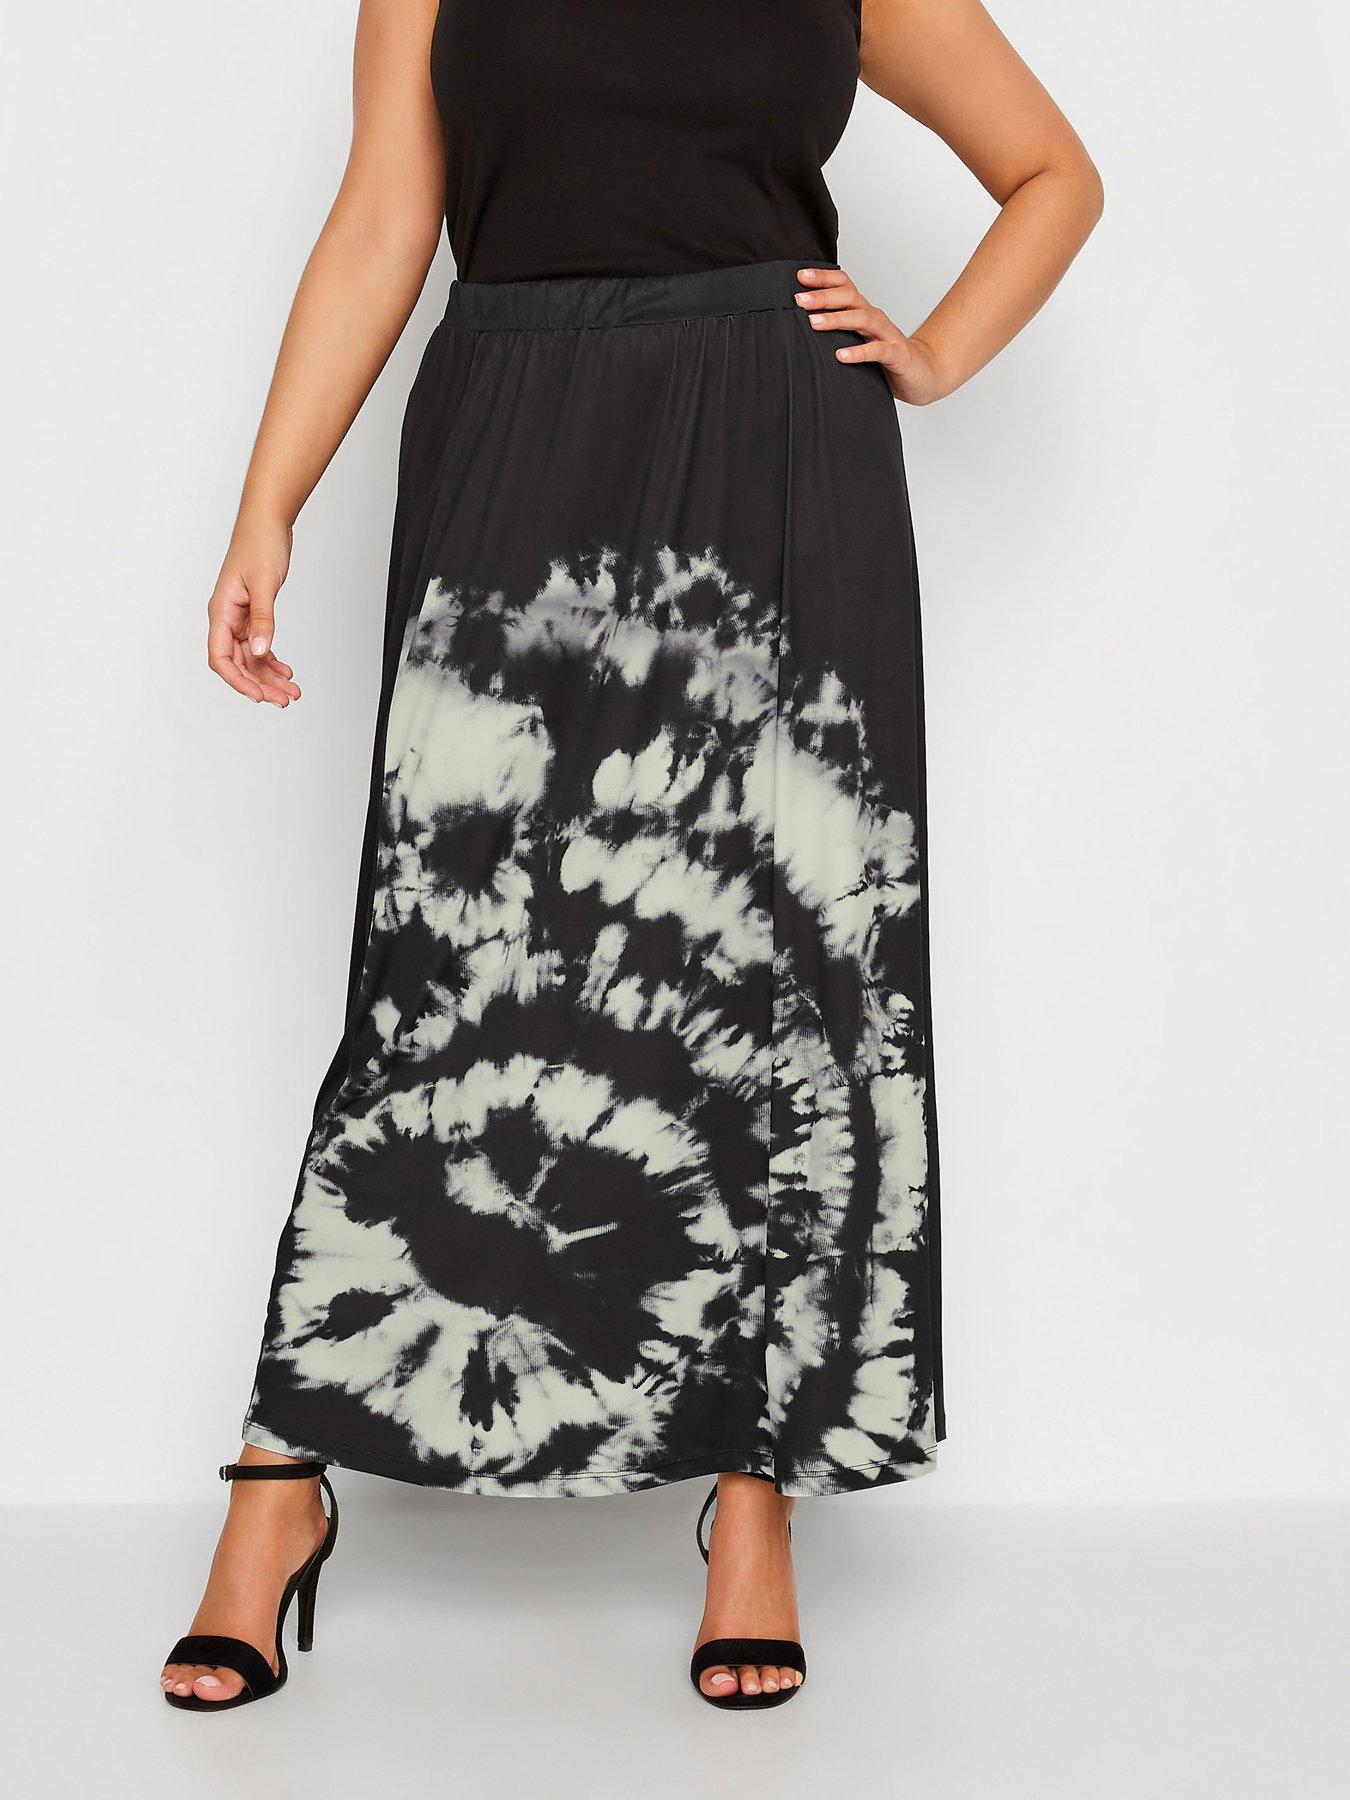 Herose Girls Womens Stretchy Digital Print Flared Flowy Pleated Casual Mini Skirt 